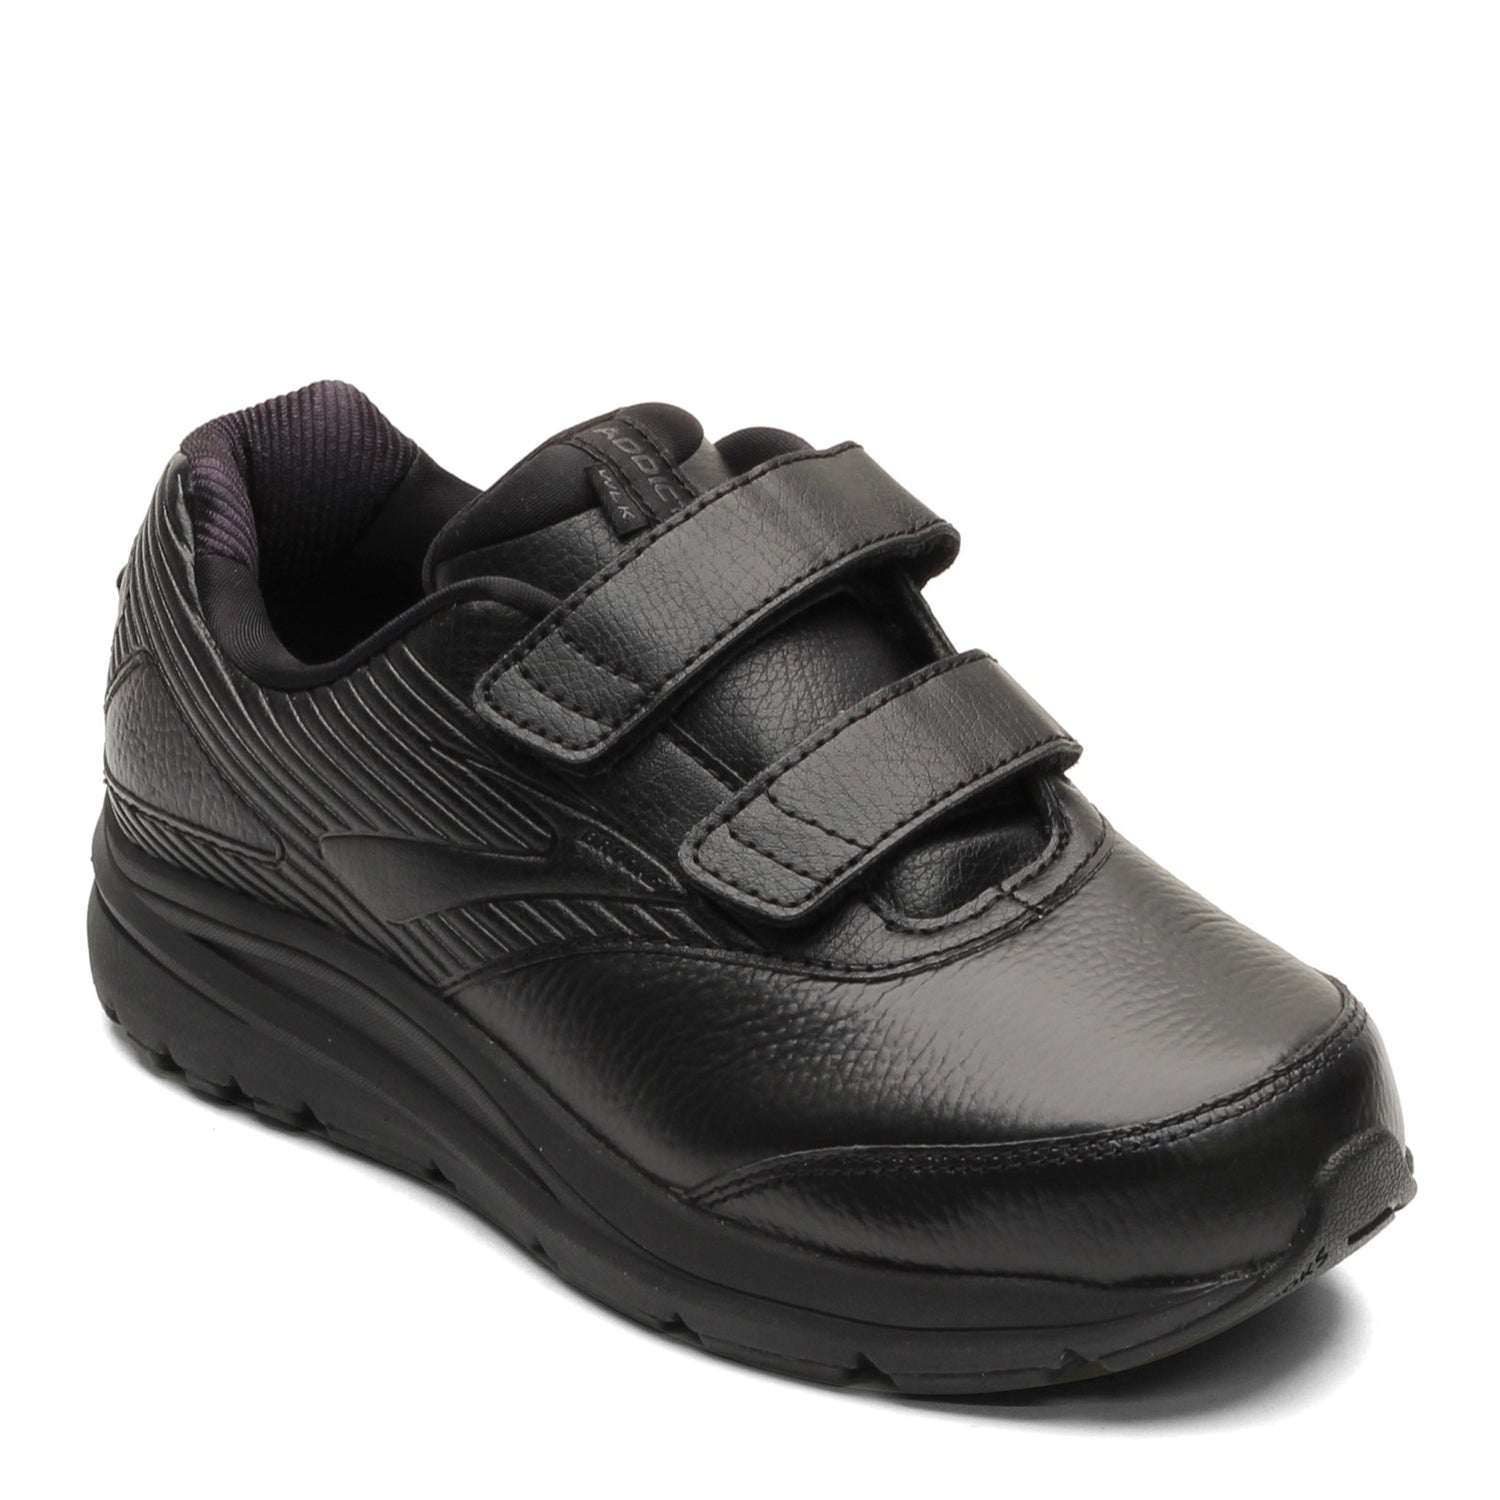 Peltz Shoes  Men's Brooks Addiction Walker V-Strap 2 Walking Shoe - Extra Wide Width Black 110320 4E 072